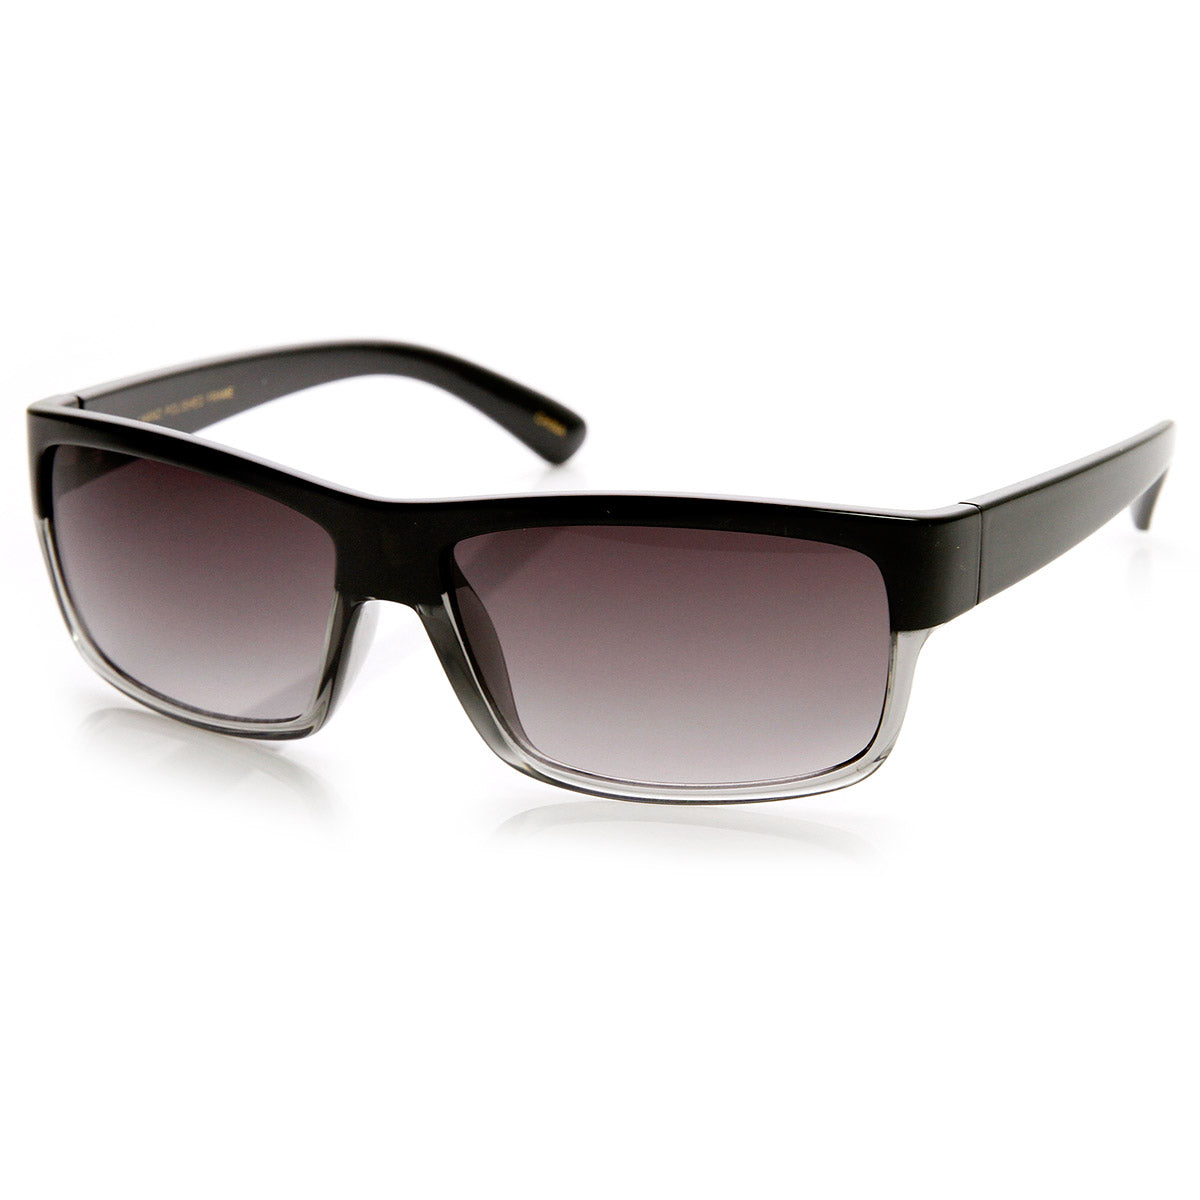 High Quality Action Sports Rectangular Lightweight Sunglasses